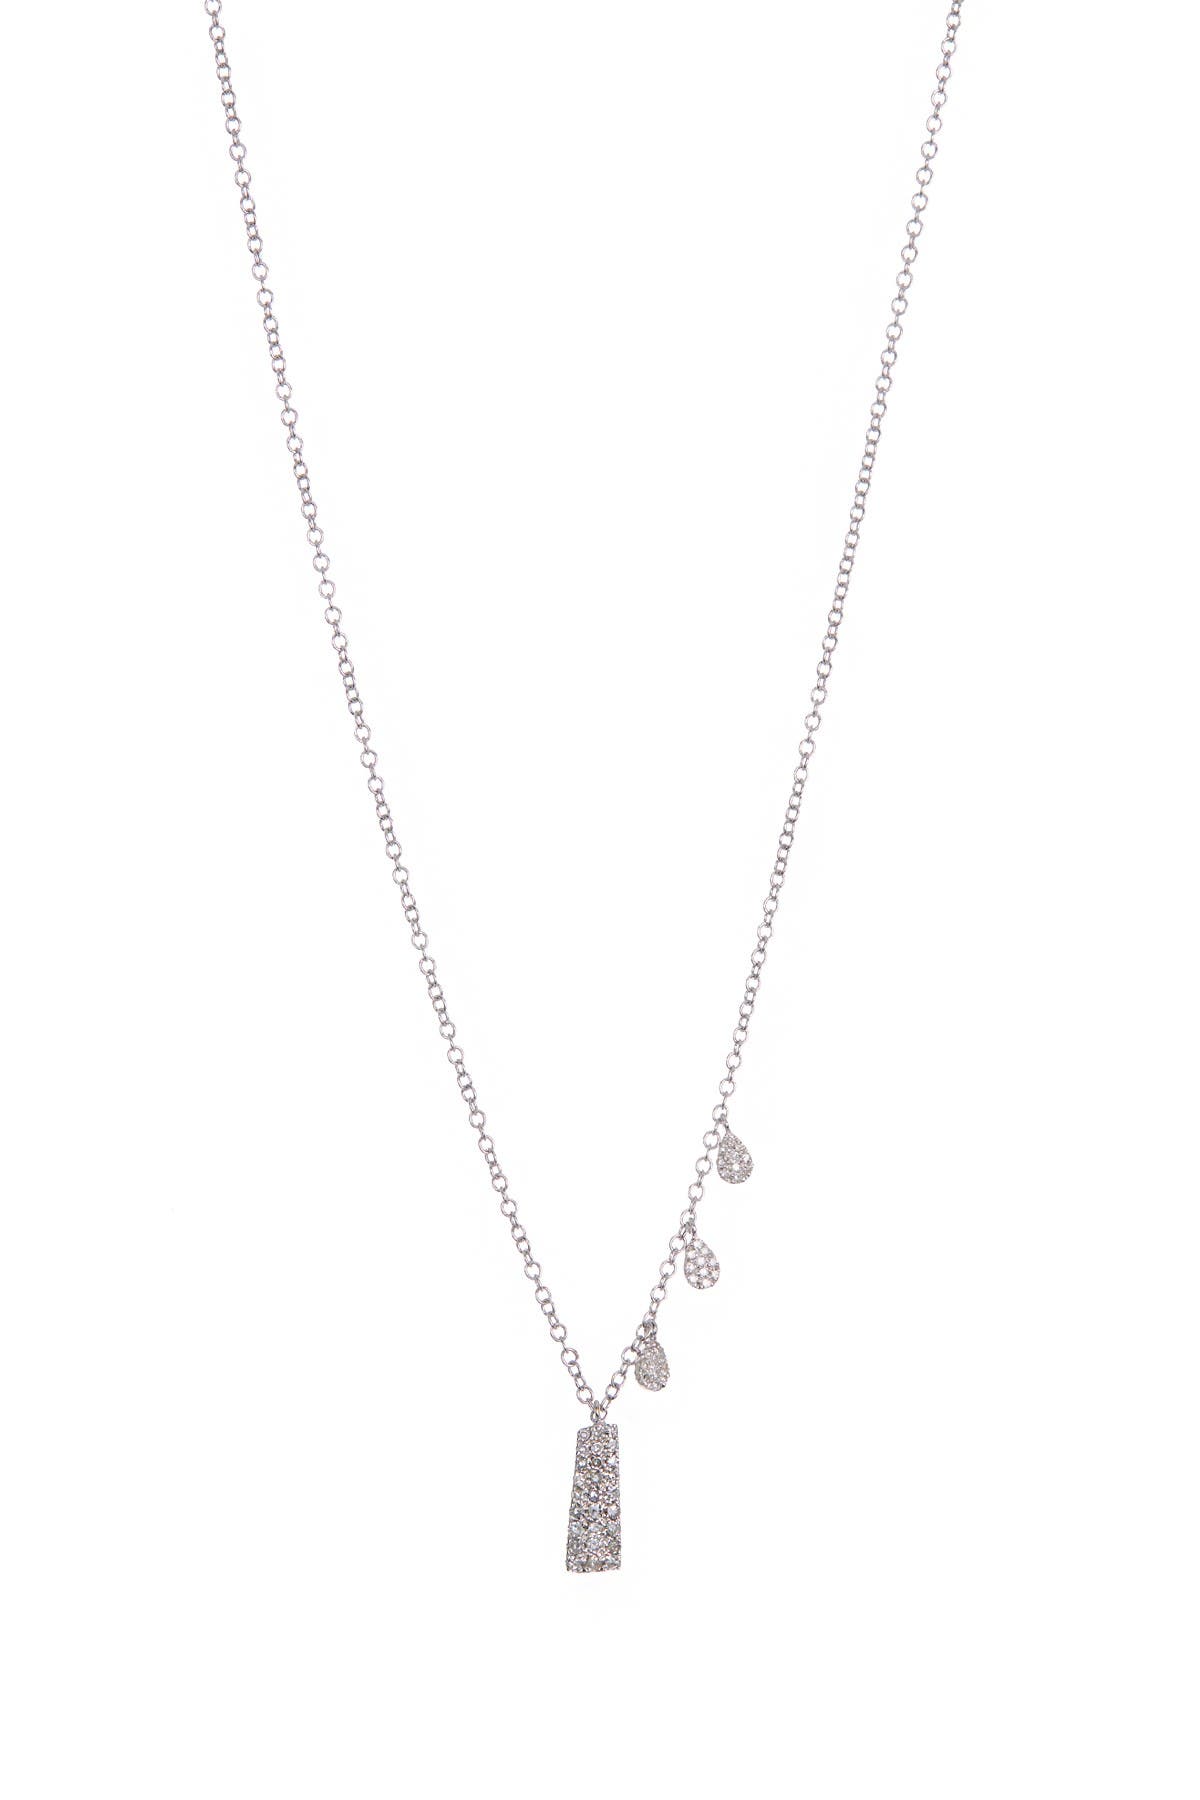 Meira T 14k White Gold Pave Diamond Necklace